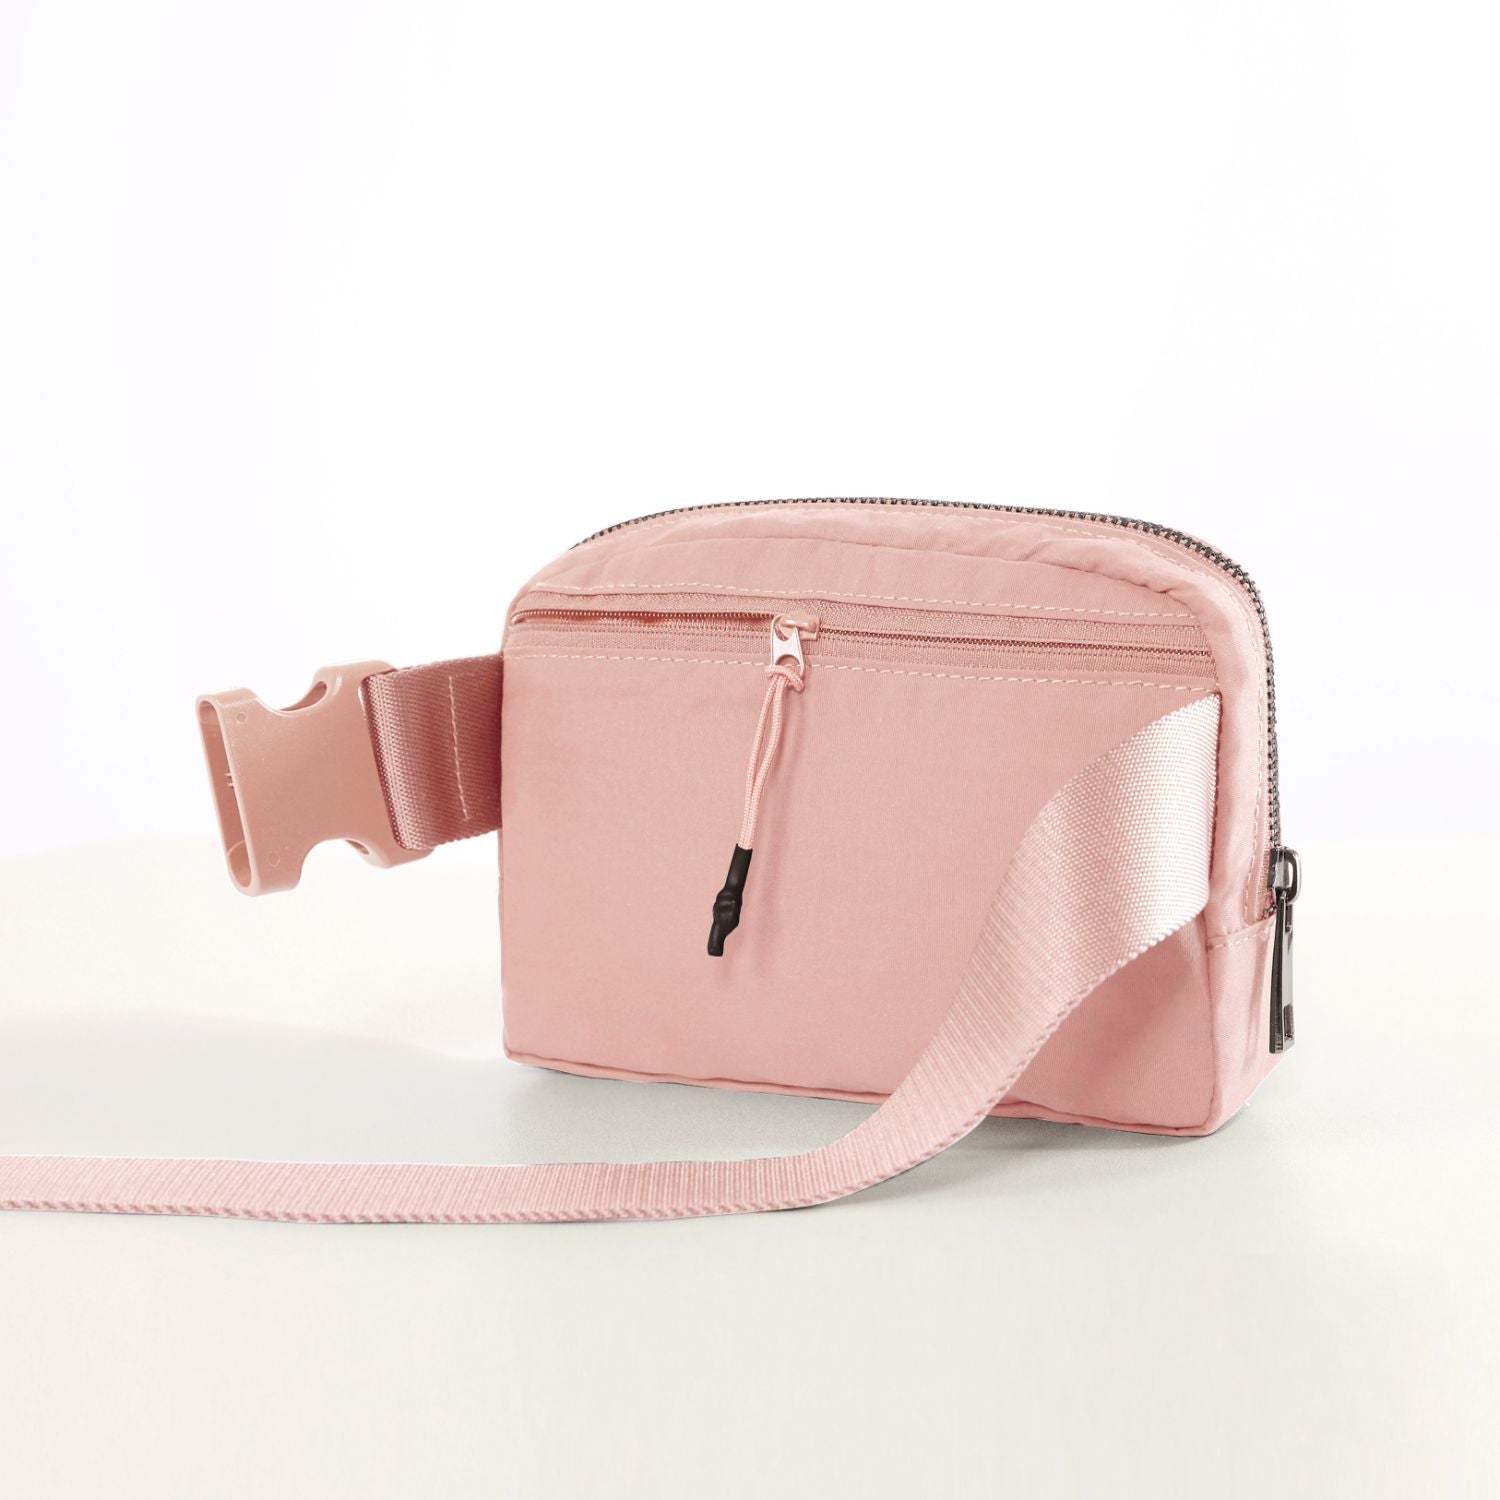 Unisex Mini Belt Bag with Adjustable Strap, Crossbody Fanny Pack